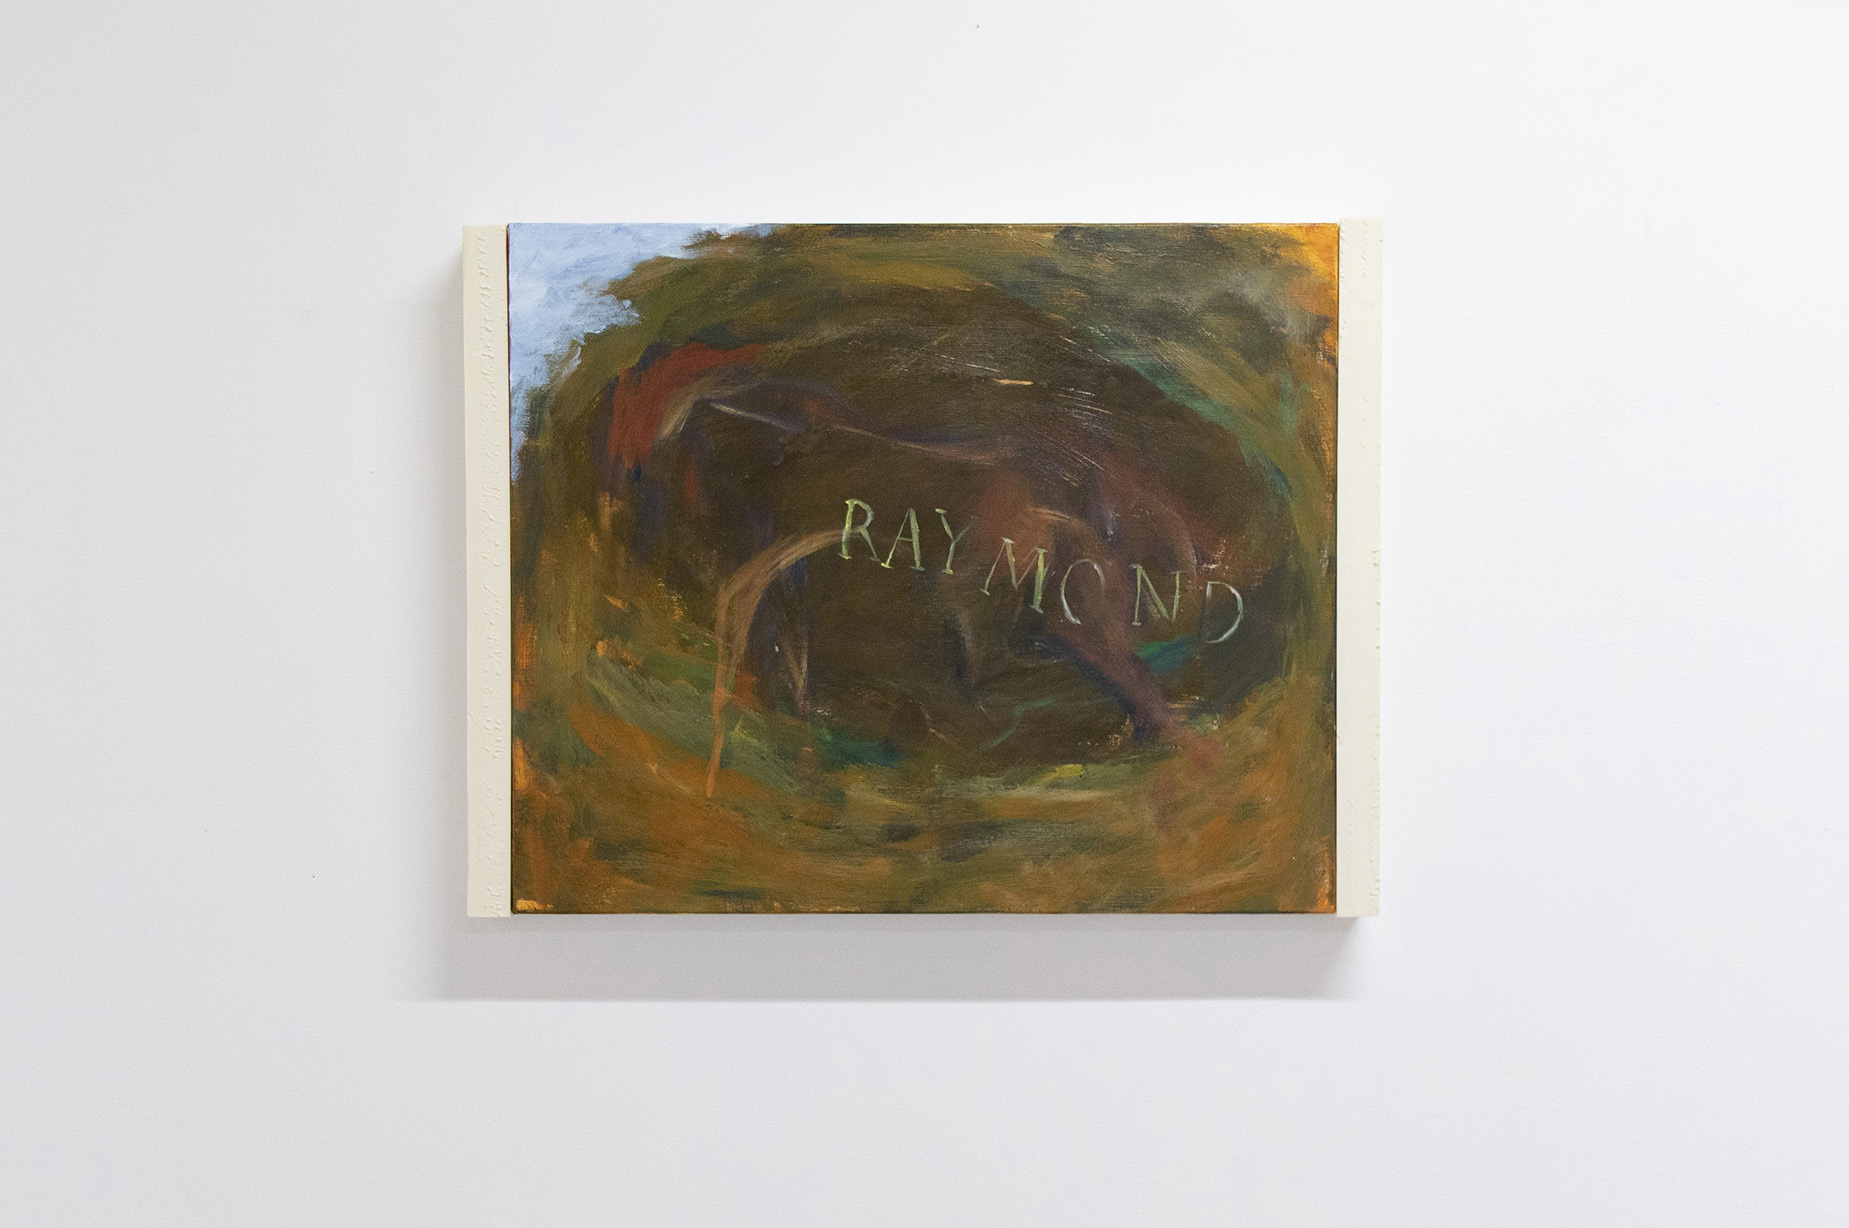 Simon Rayssac, bison raymond, 2022. Acrylic and oil on canvas, 46 x 55,5 x 4,5 cm (+artist's frame) © Pierre Poumet